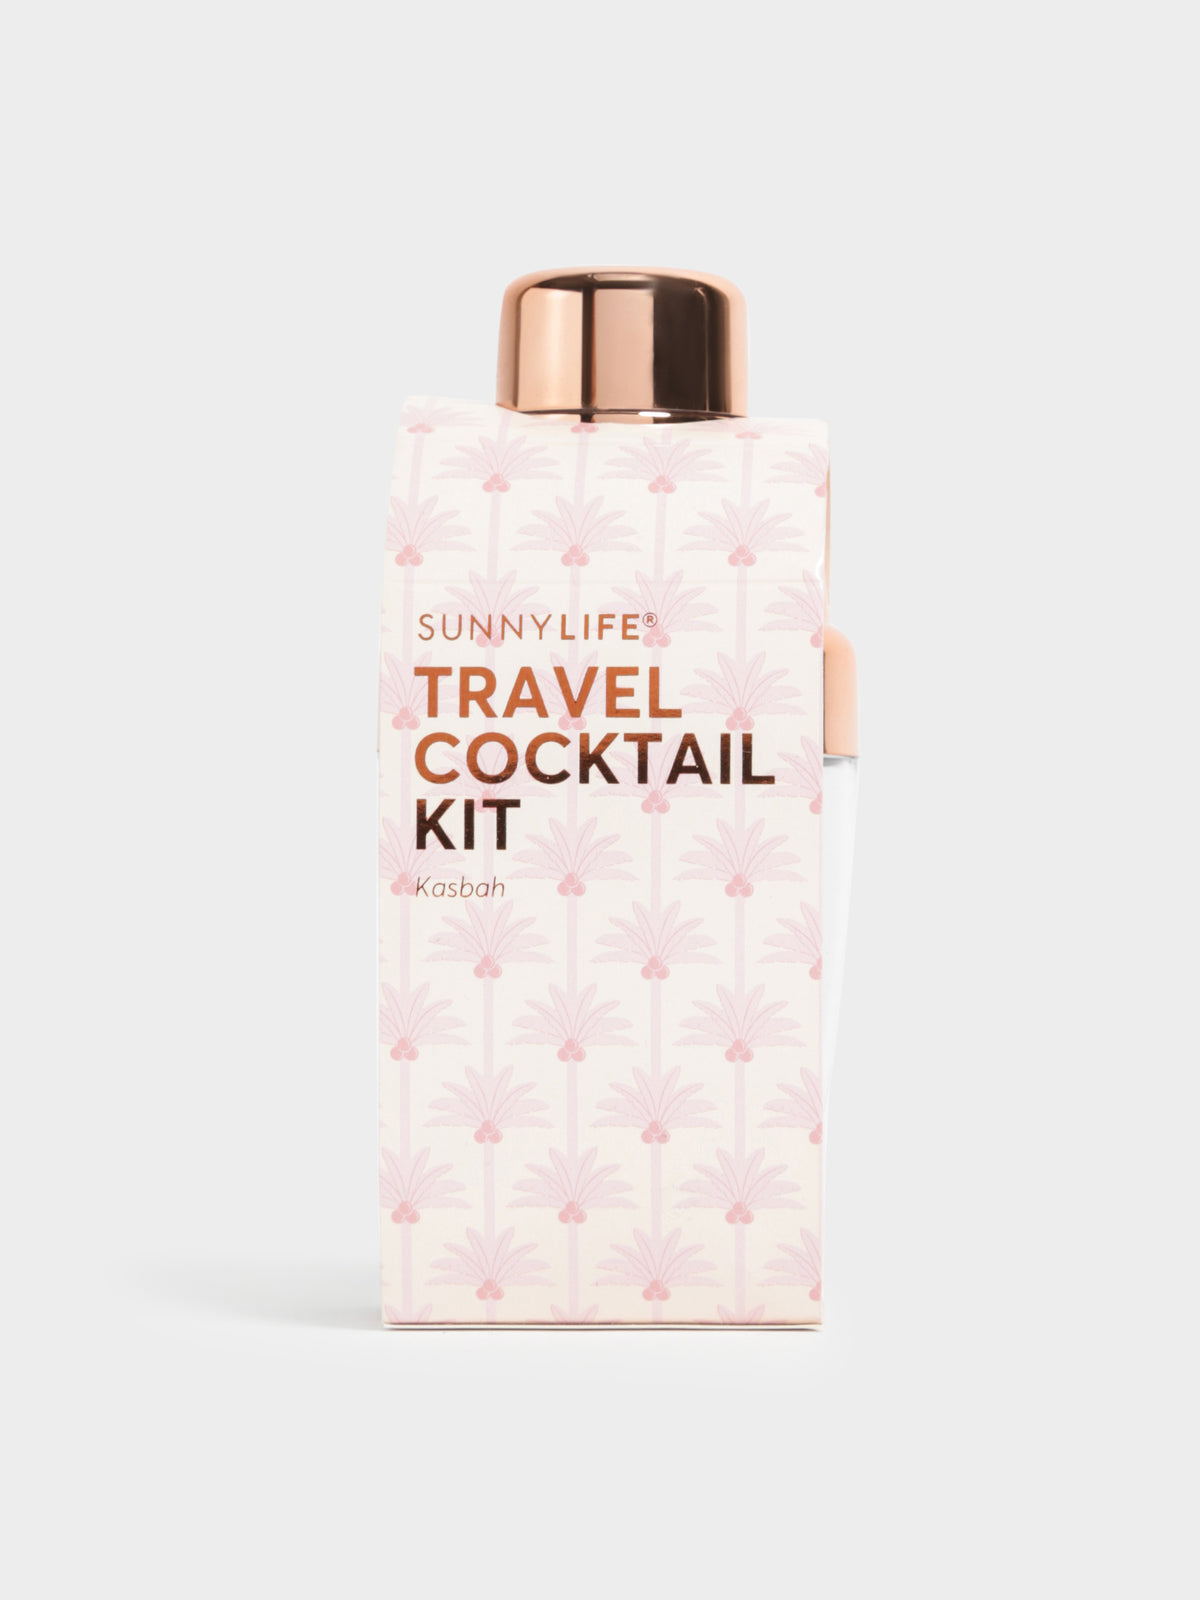 Travel Cocktail Kit in Kasbah